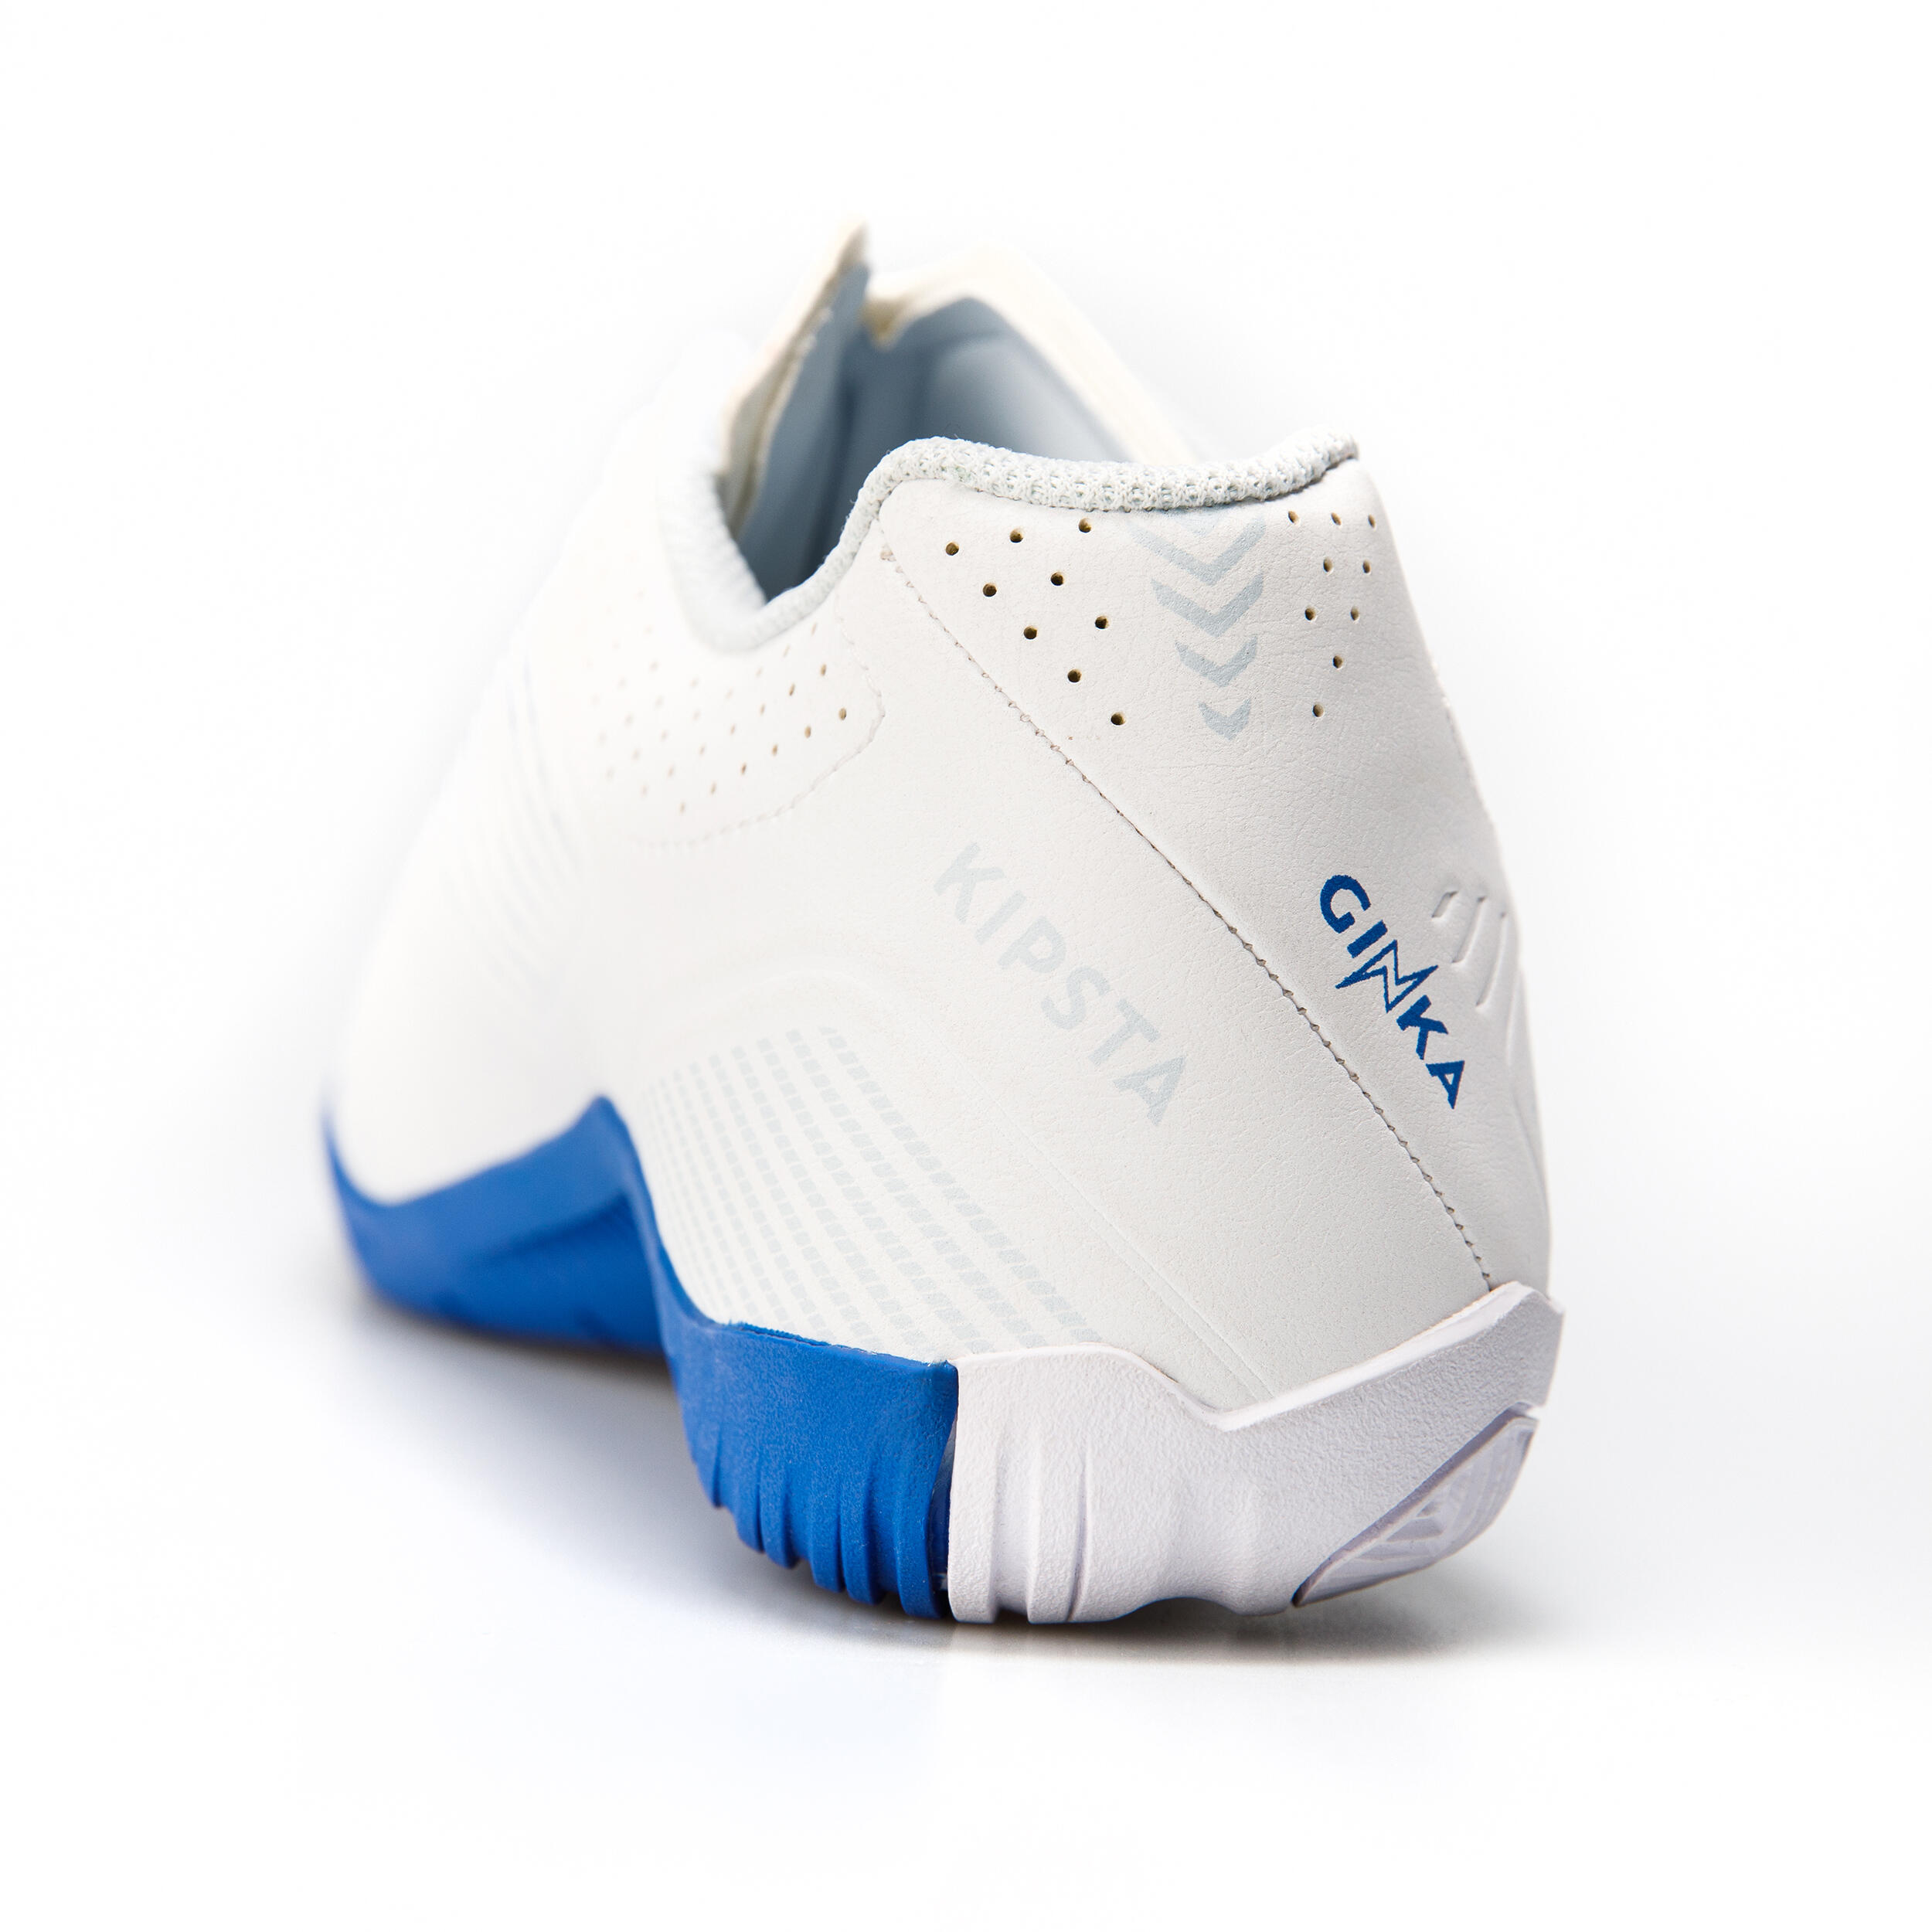 Futsal Trainers Ginka 500 - White/Blue 8/10